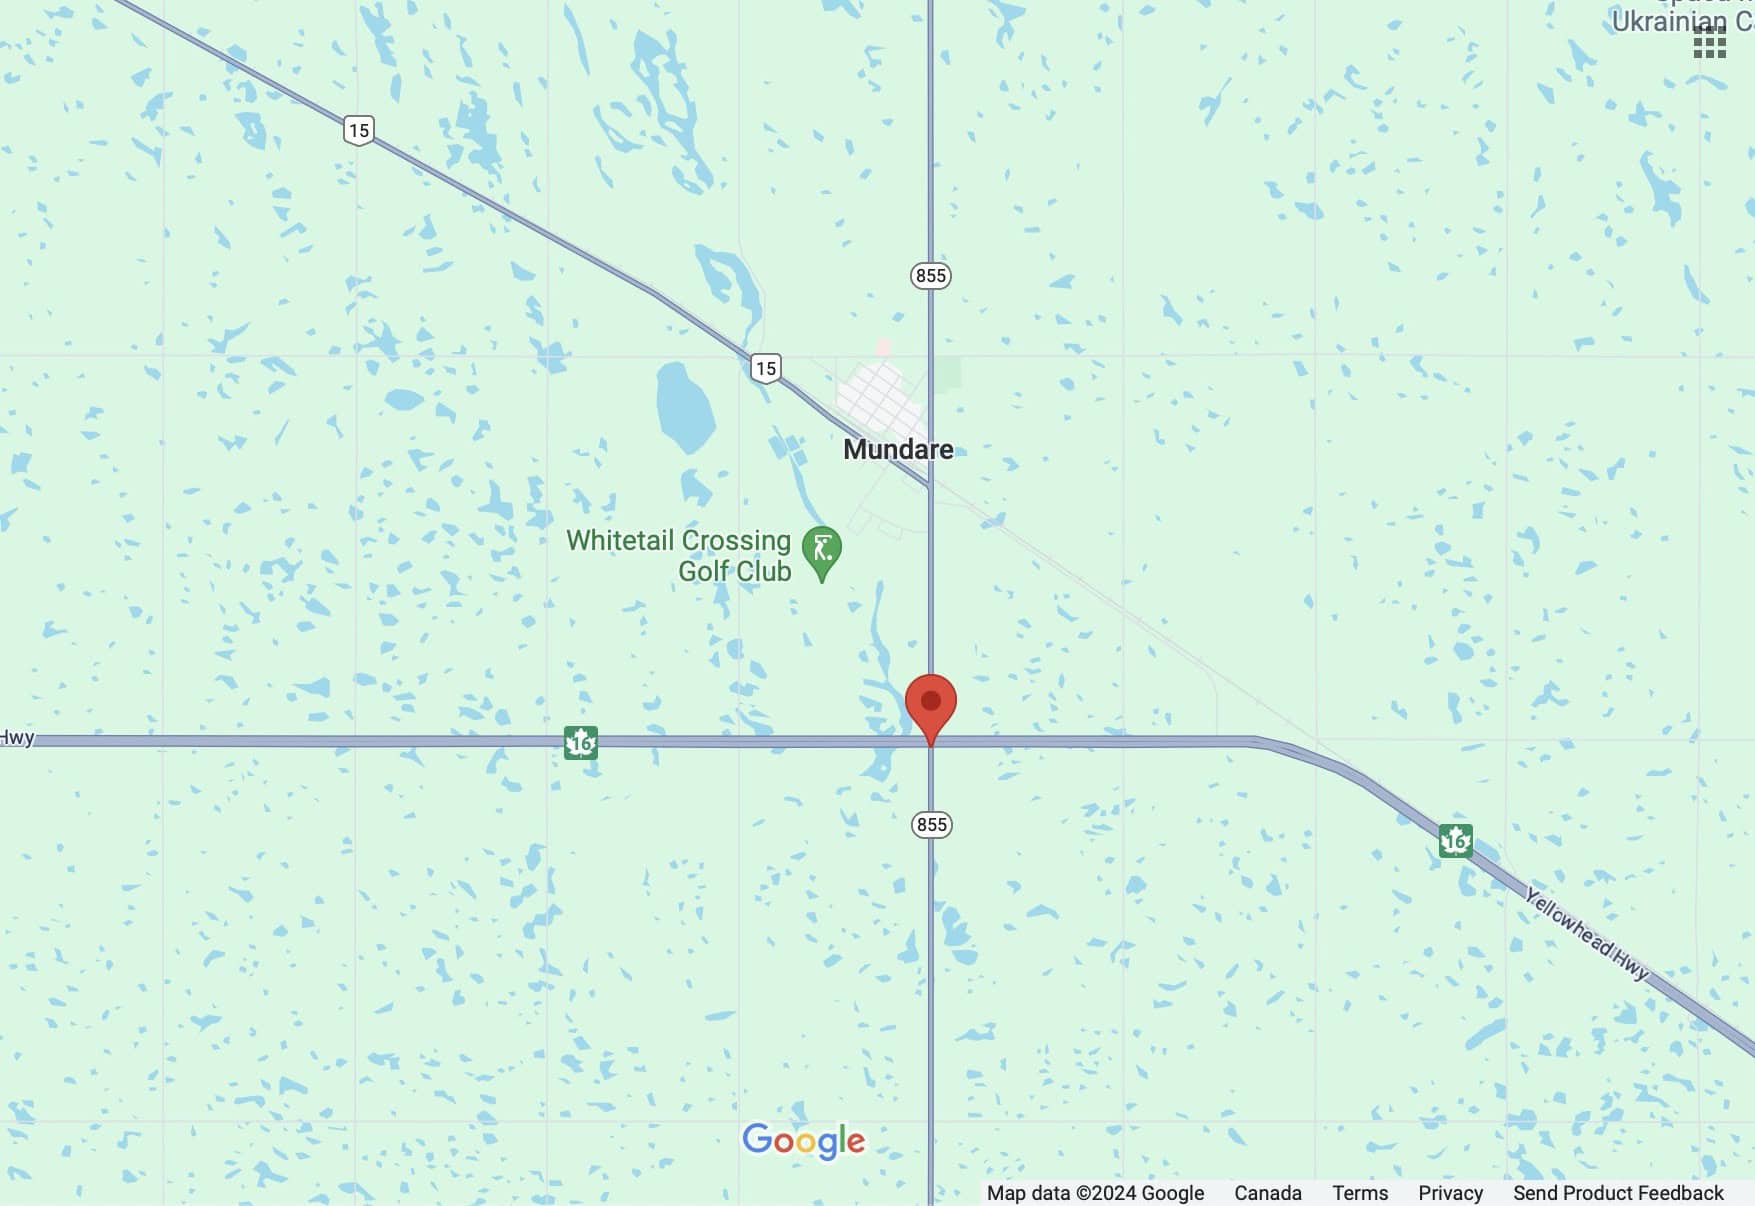 Map of collision location near Mundare